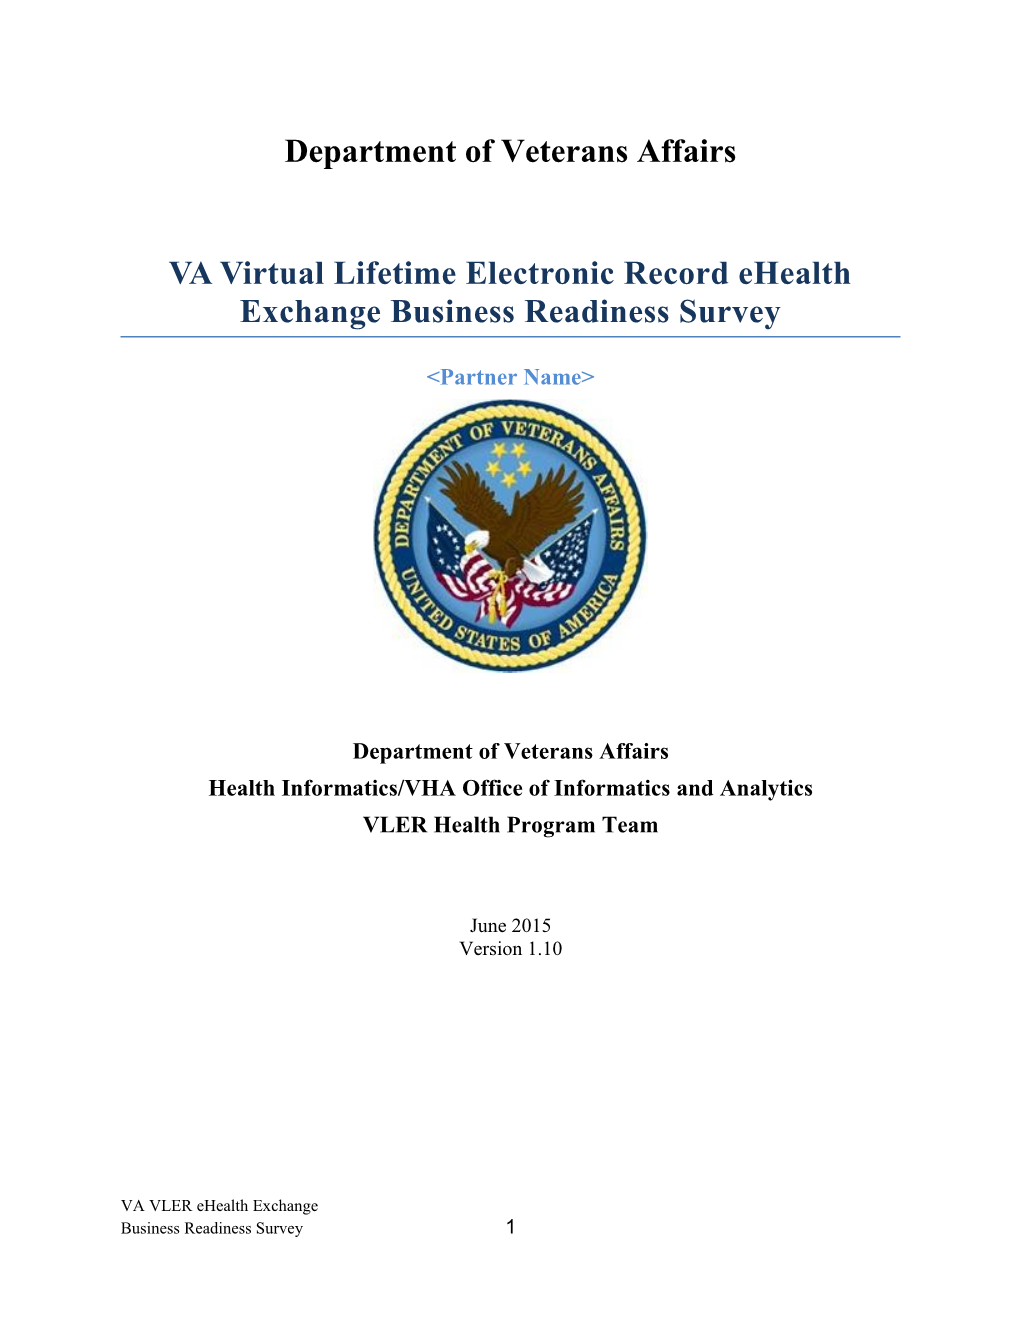 VA Nwhin Exchange Business Partner Readiness Survey VA Answers